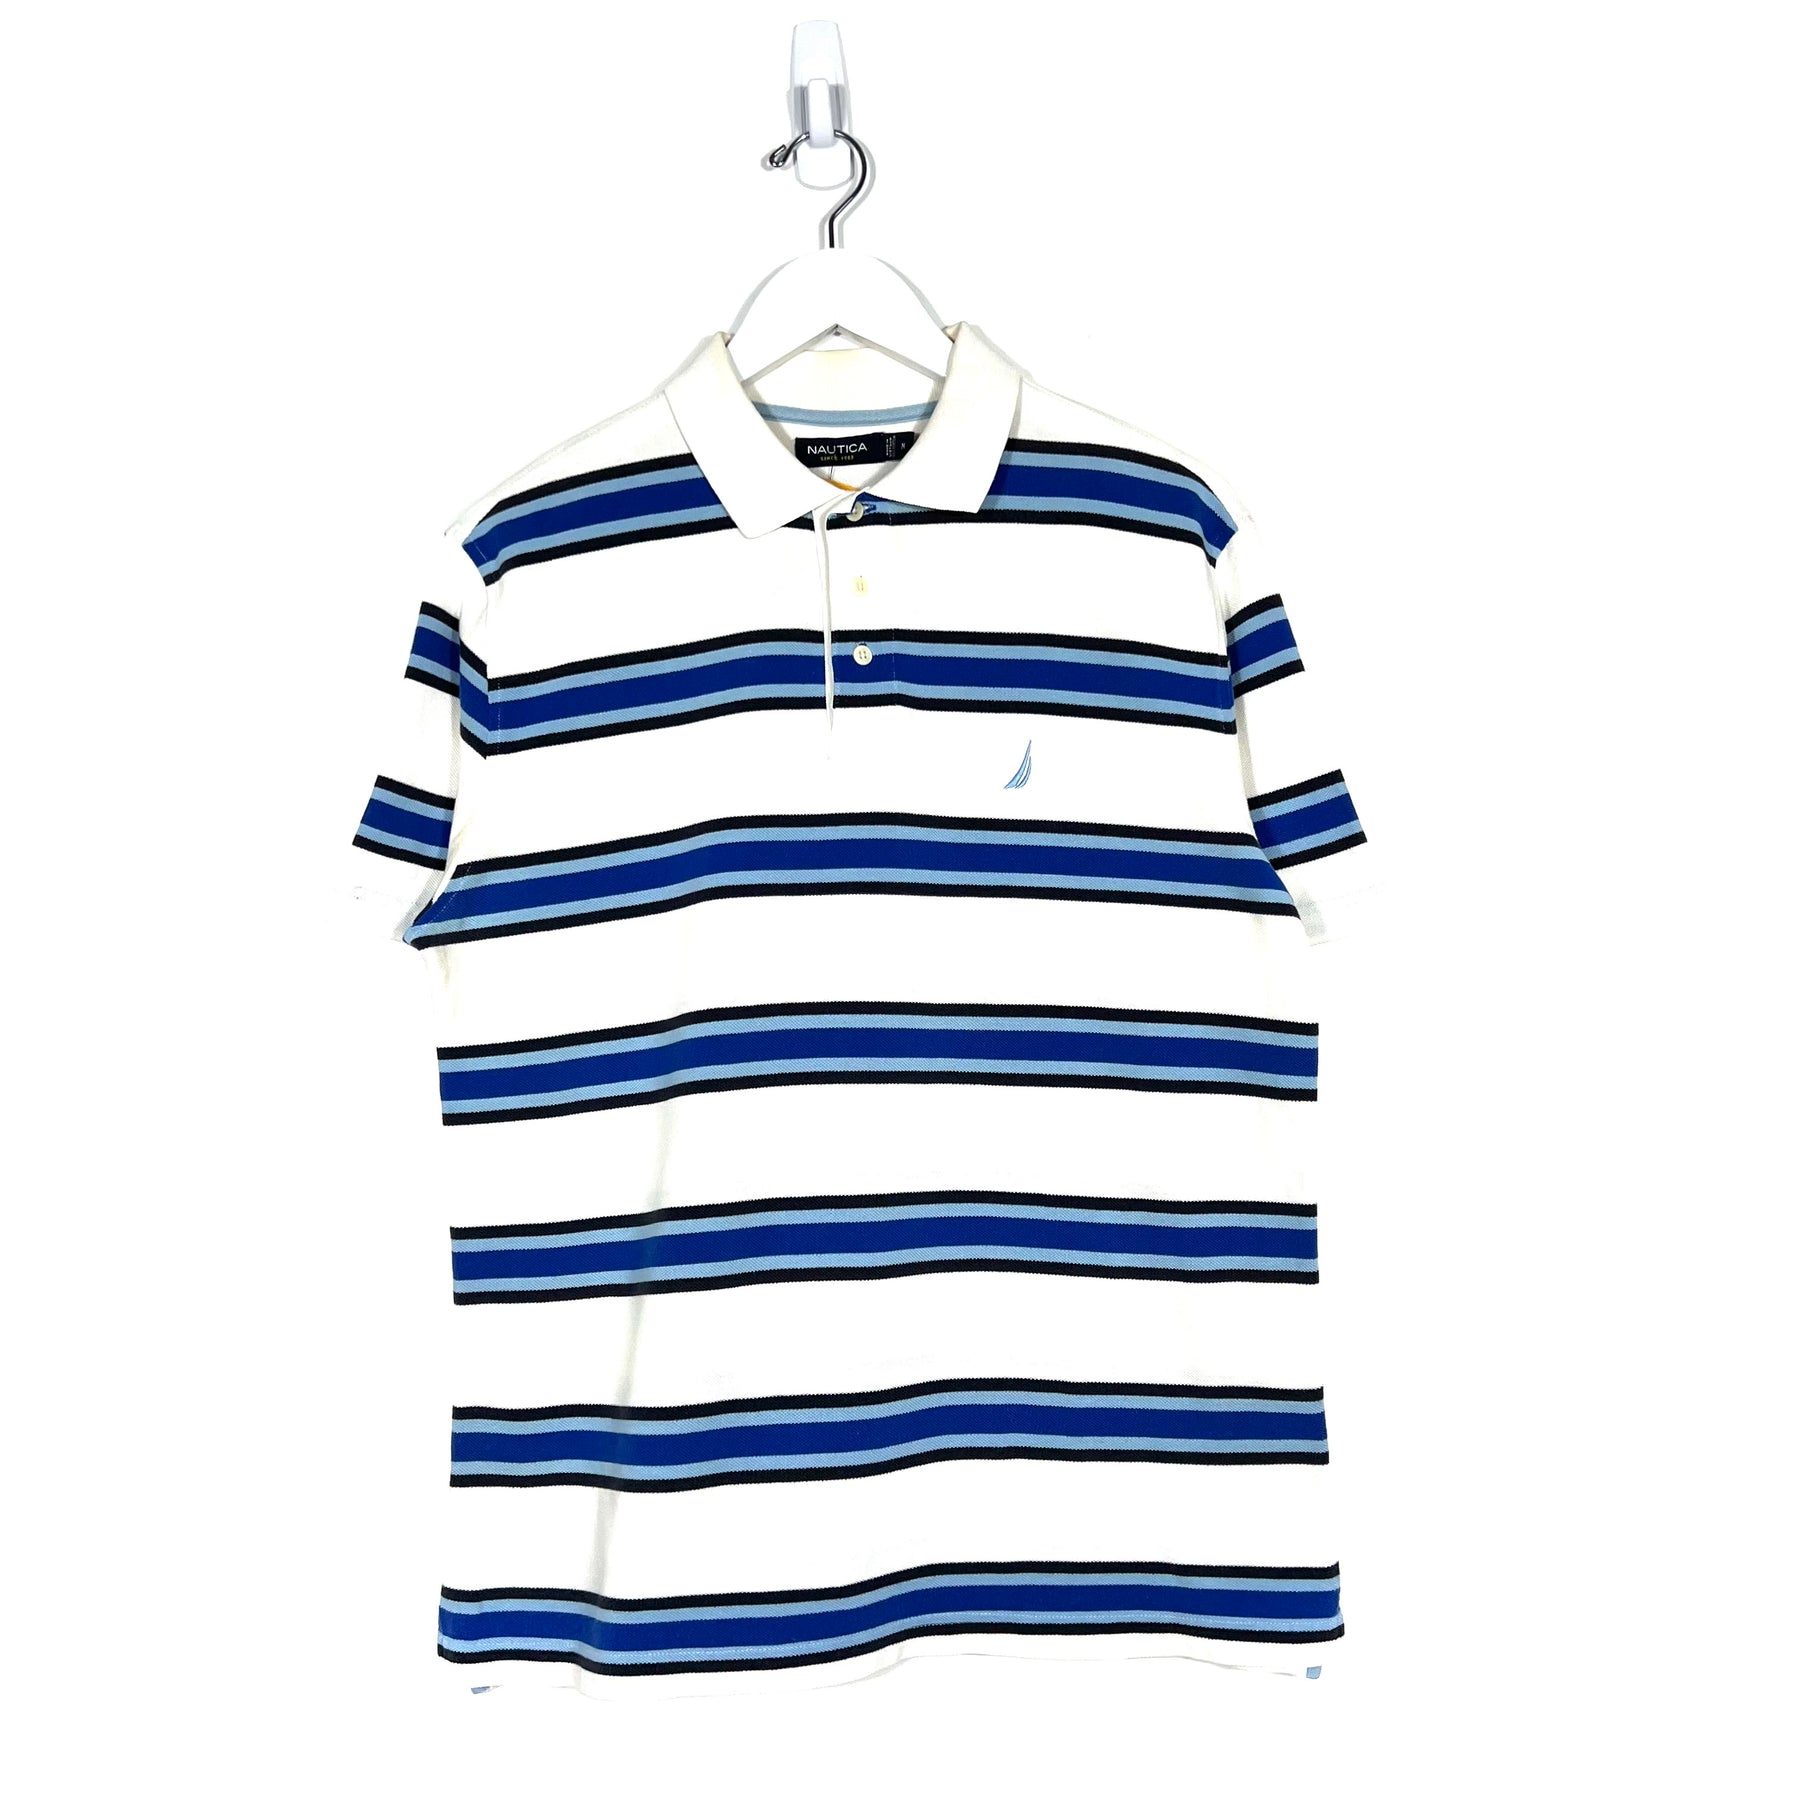 Nautica Rugby Polo Shirt - Men's Medium